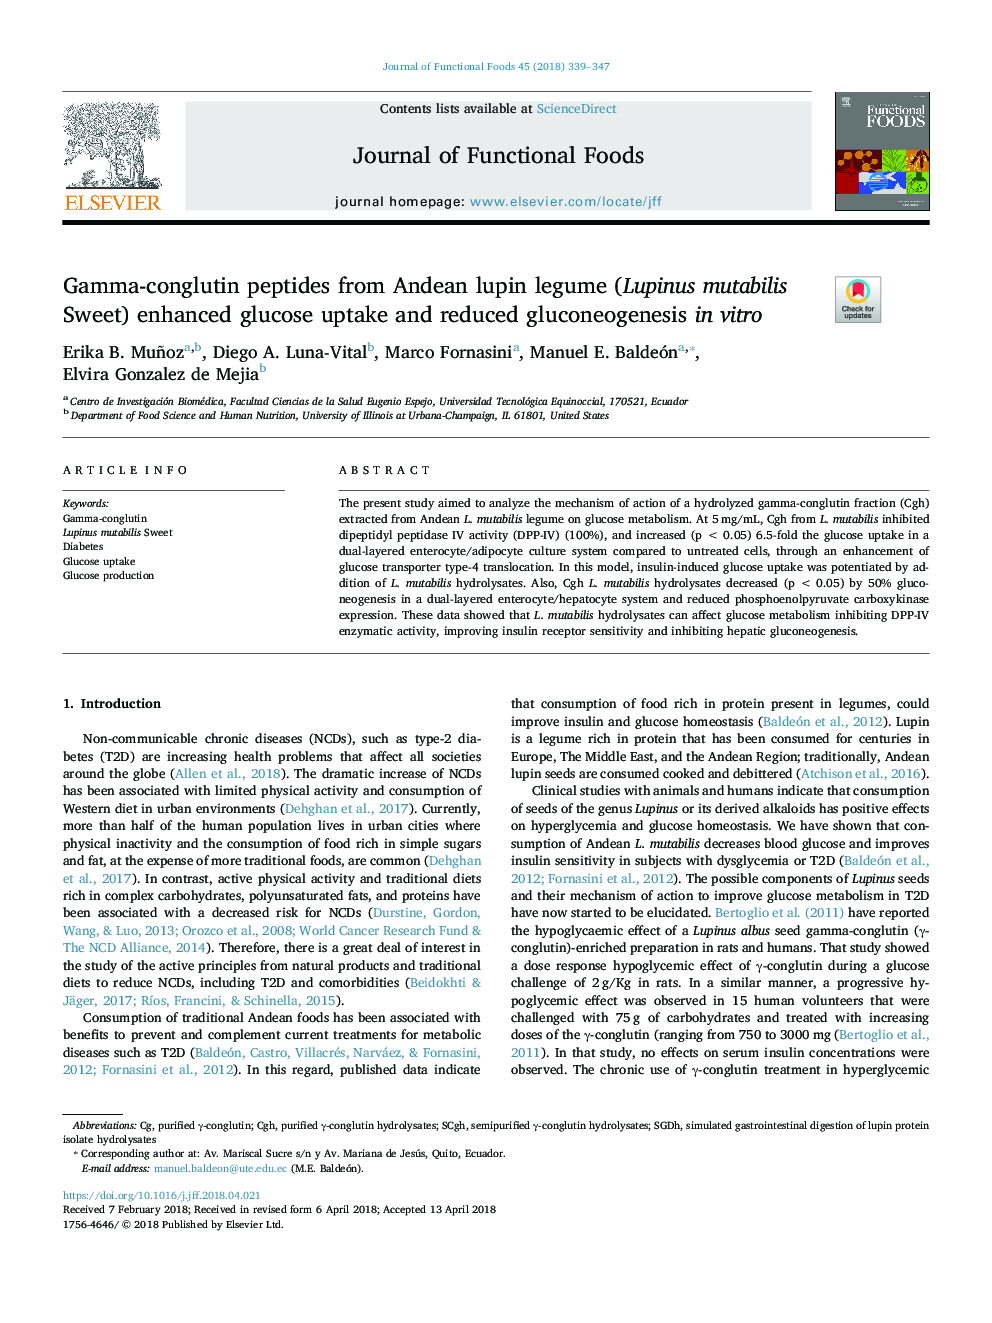 Gamma-conglutin peptides from Andean lupin legume (Lupinus mutabilis Sweet) enhanced glucose uptake and reduced gluconeogenesis in vitro